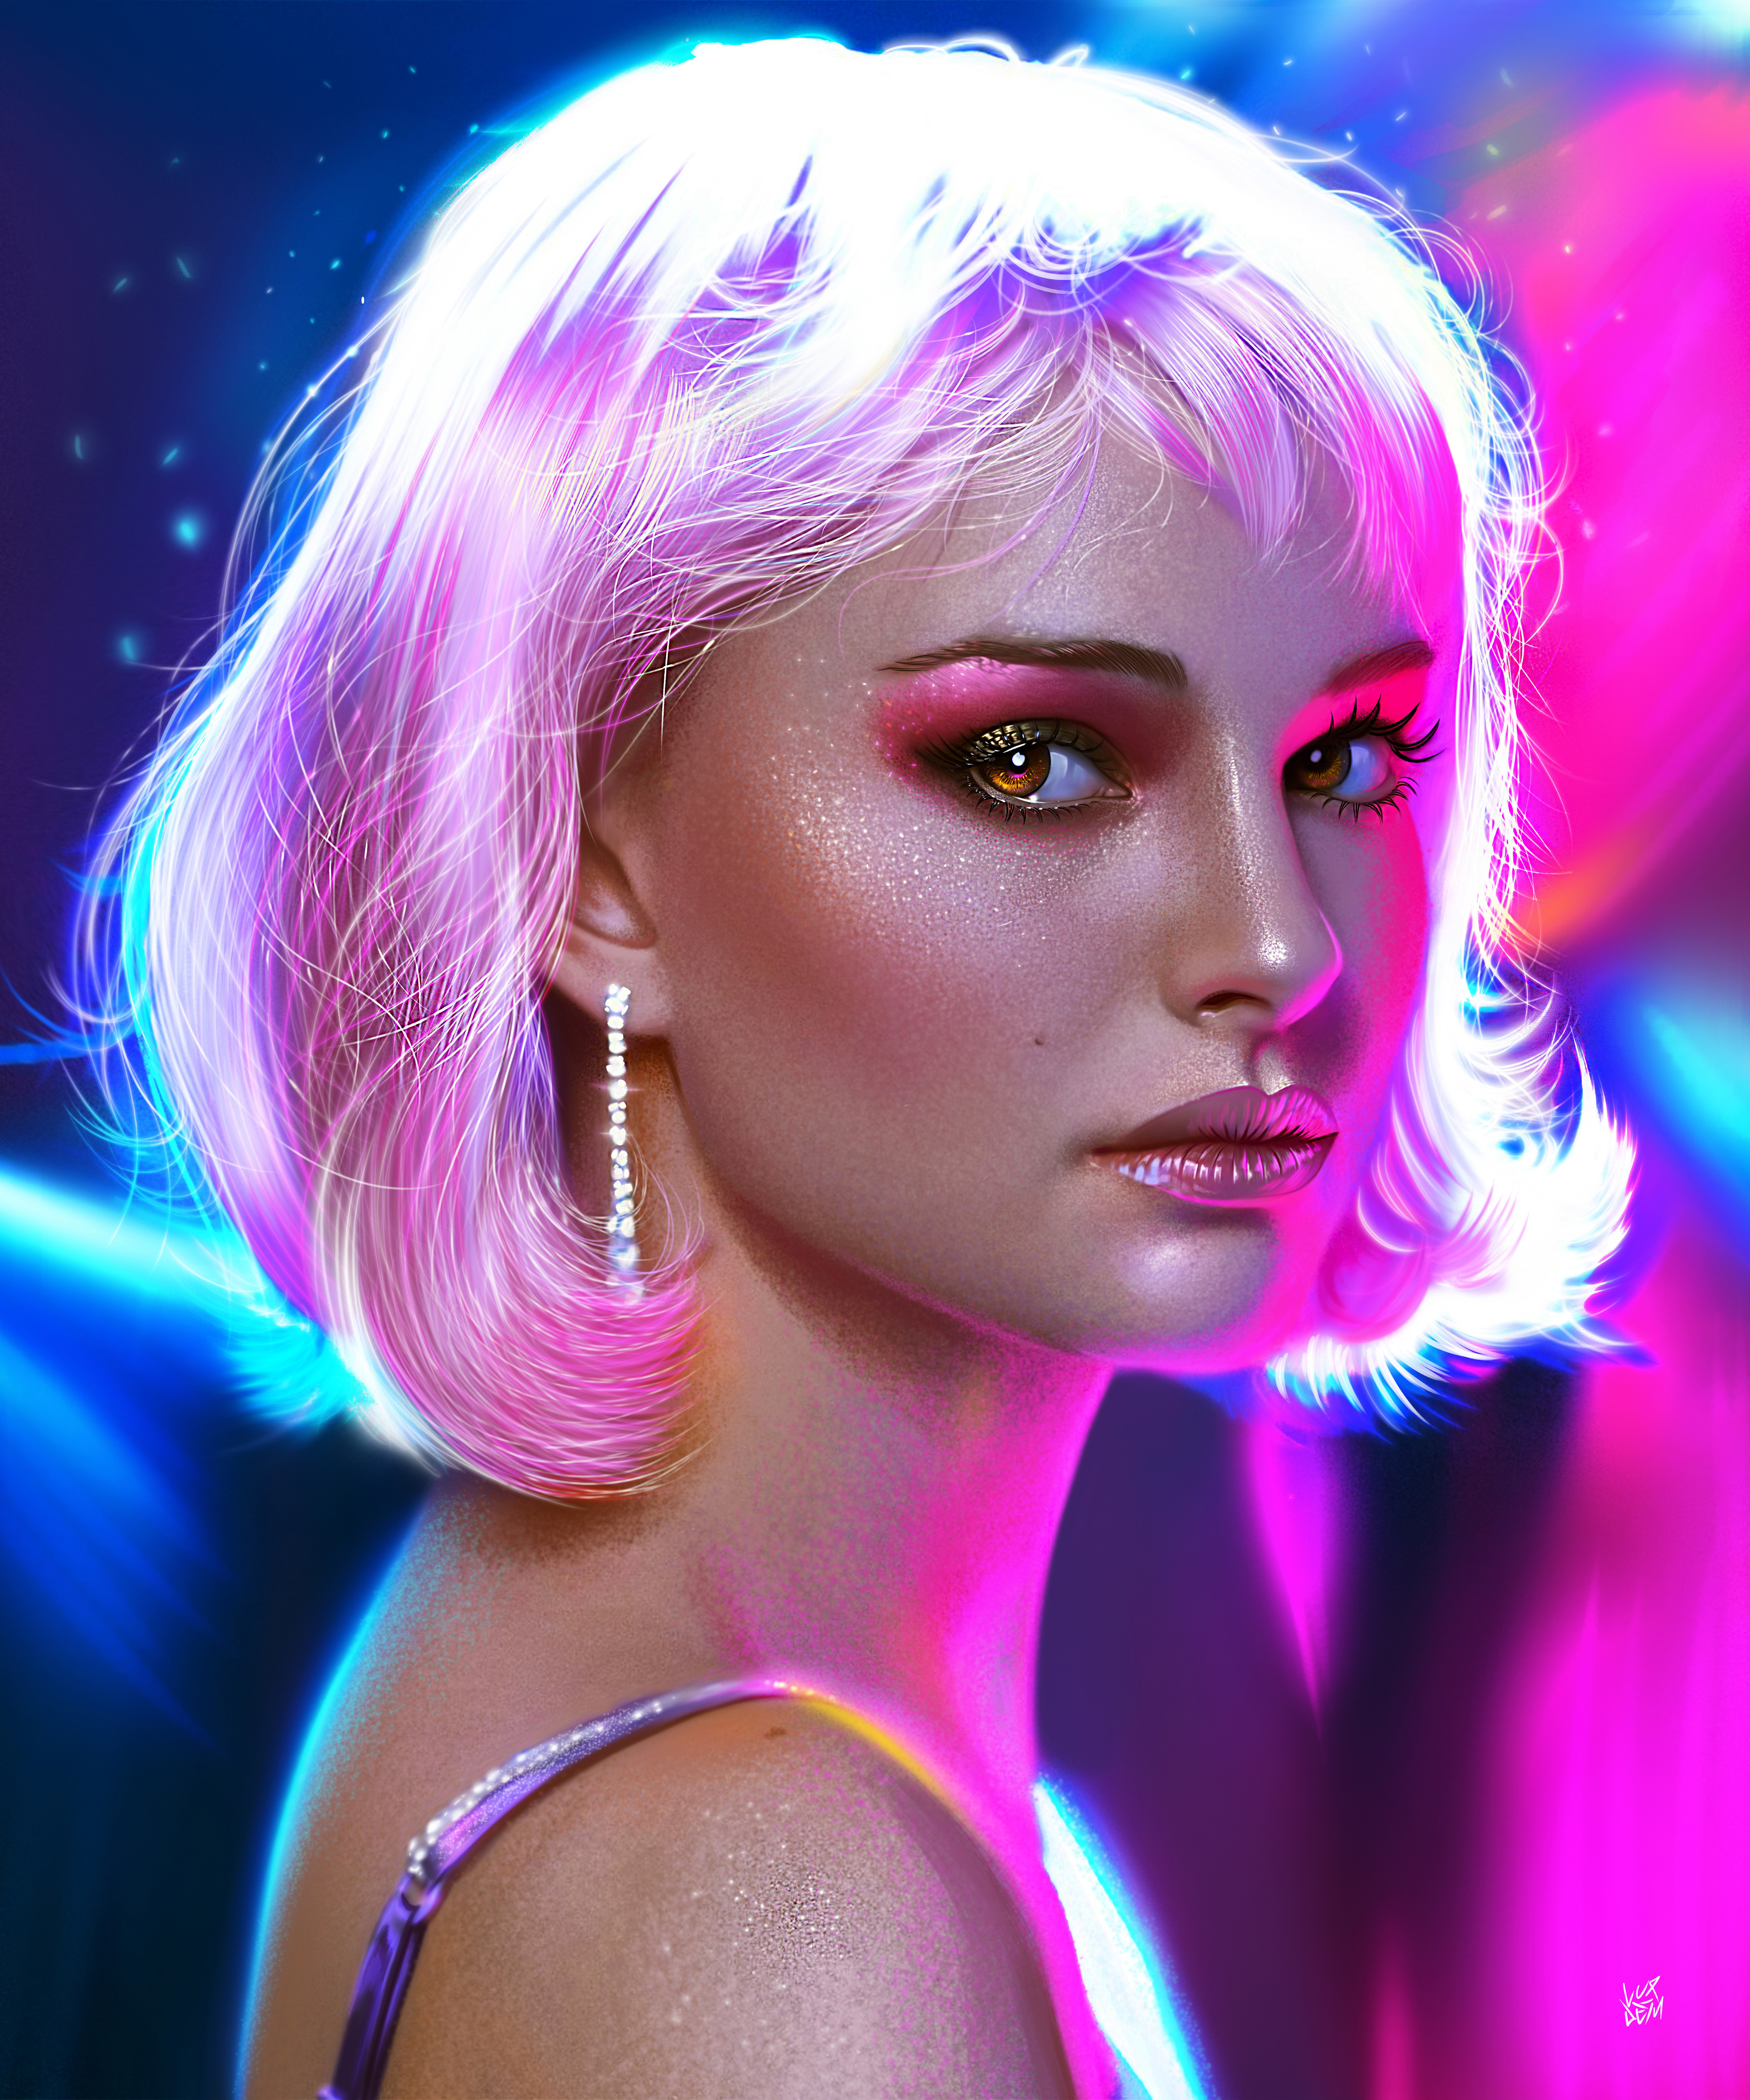 Natalie portman in pink wig